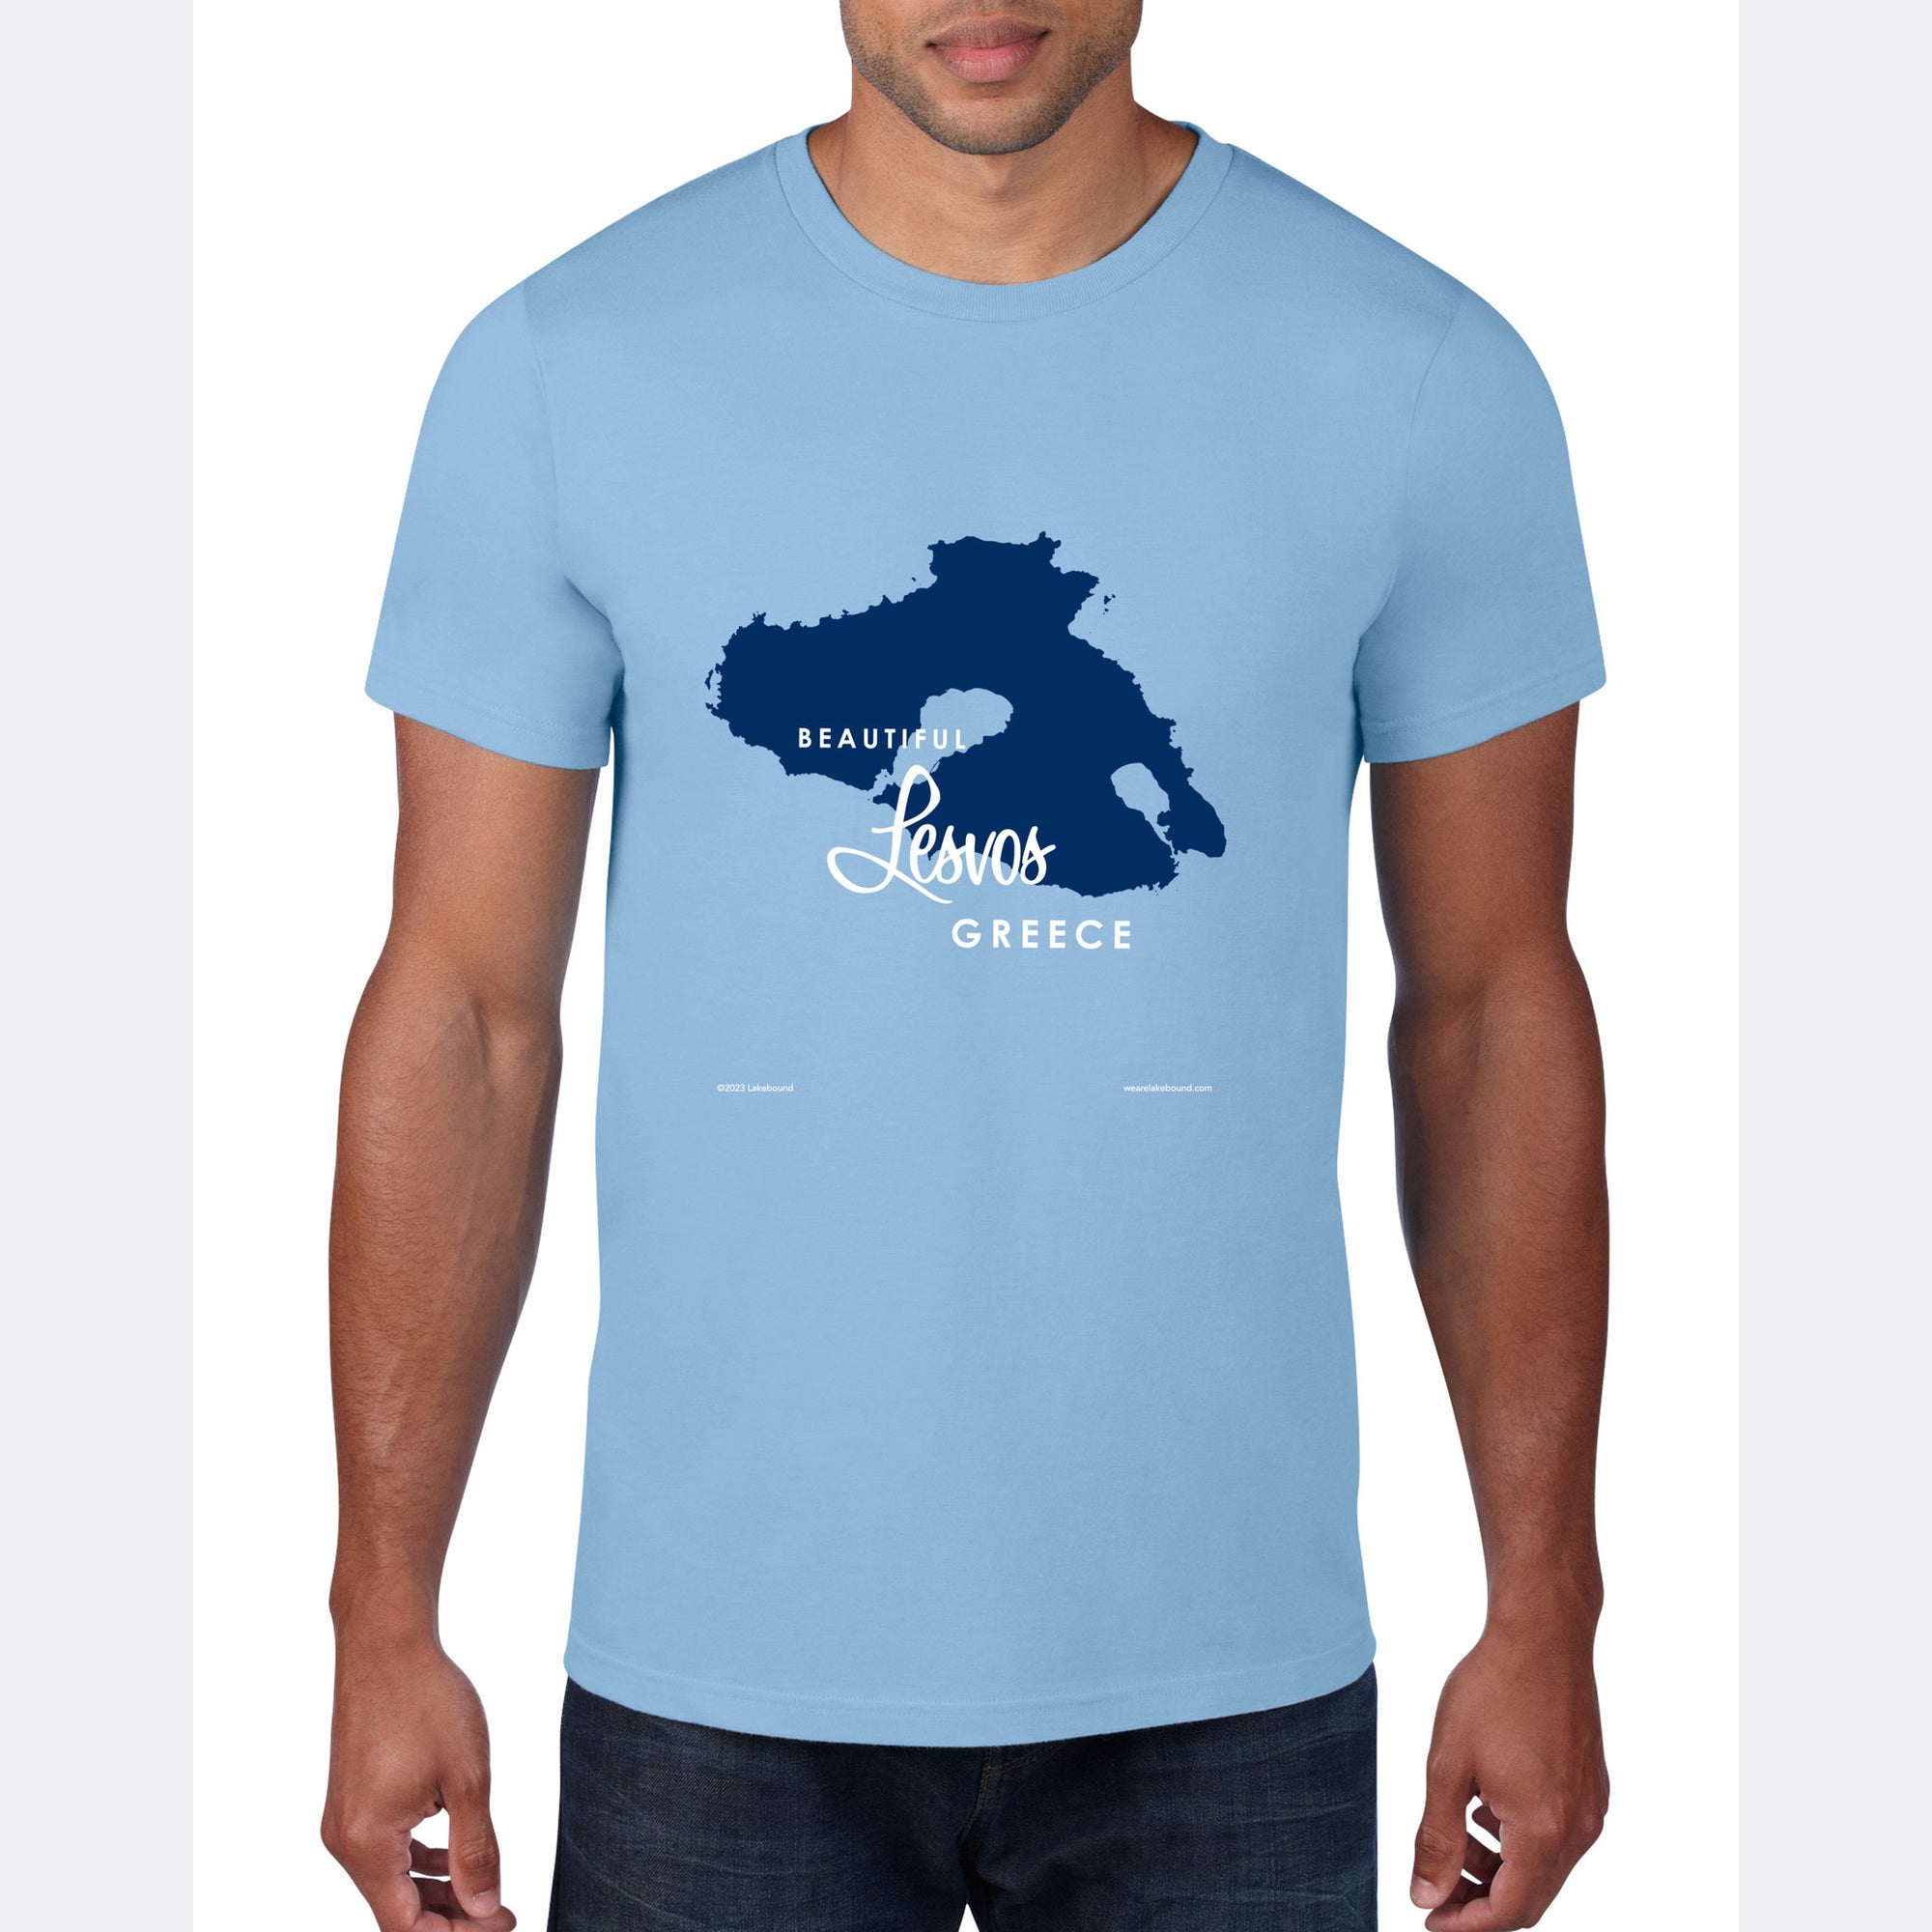 Lesvos Greece, T-Shirt